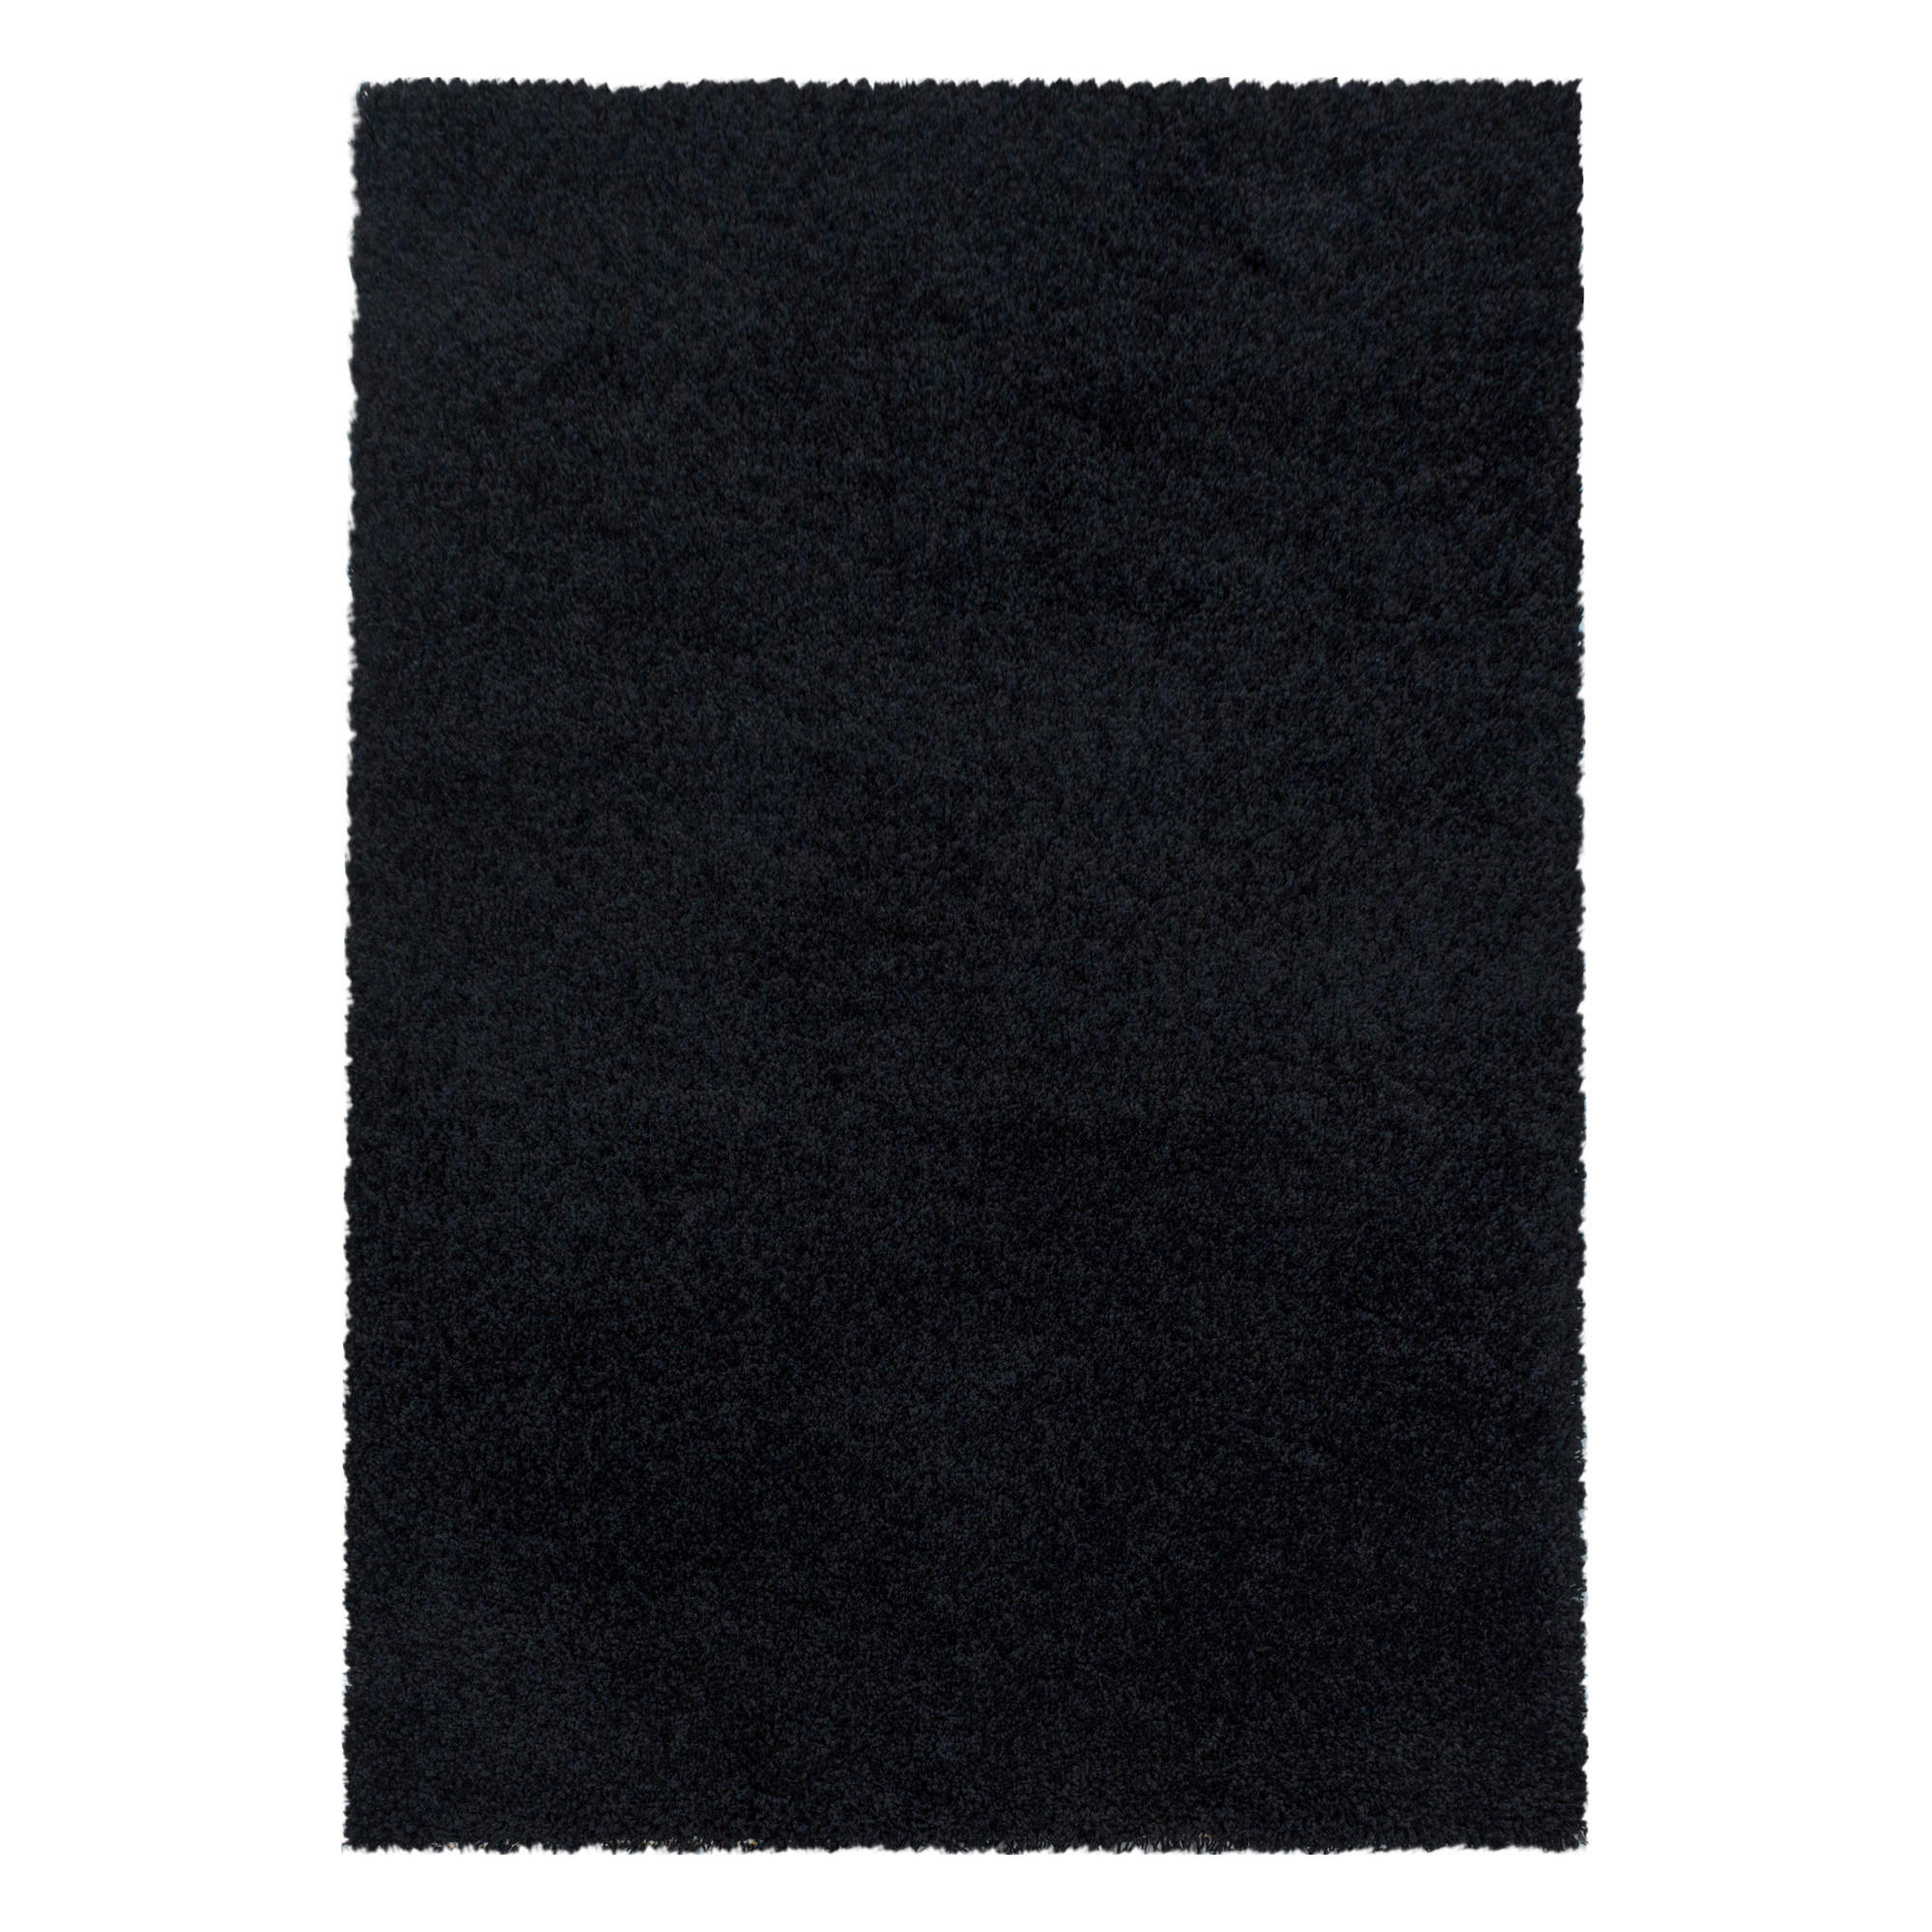 Hochflor Teppich Schwarz 60/110 cm Sydney 3000 schwarz  - Schwarz, Basics, Textil (60/110cm) - Novel